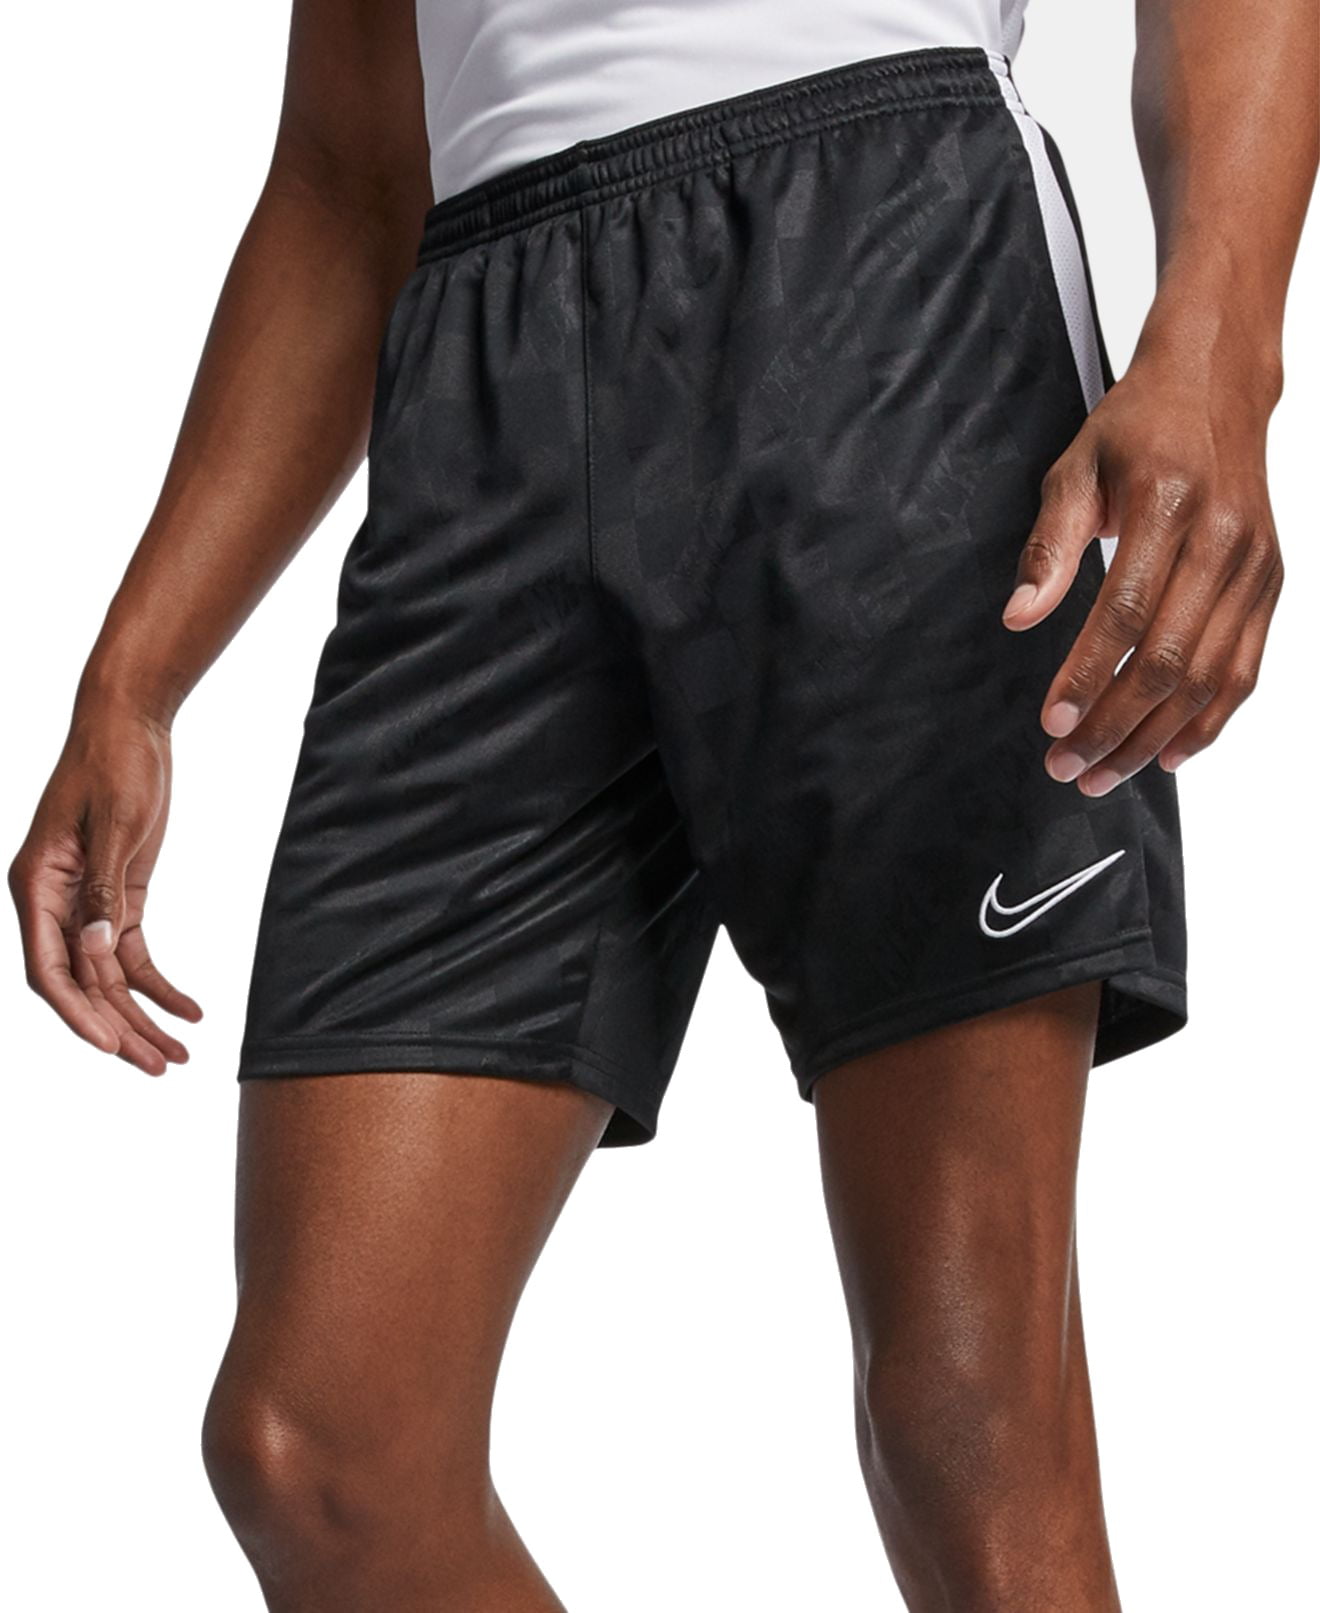 Mens Shorts White Dri Fit Academy Training Athletic XL - Walmart.com